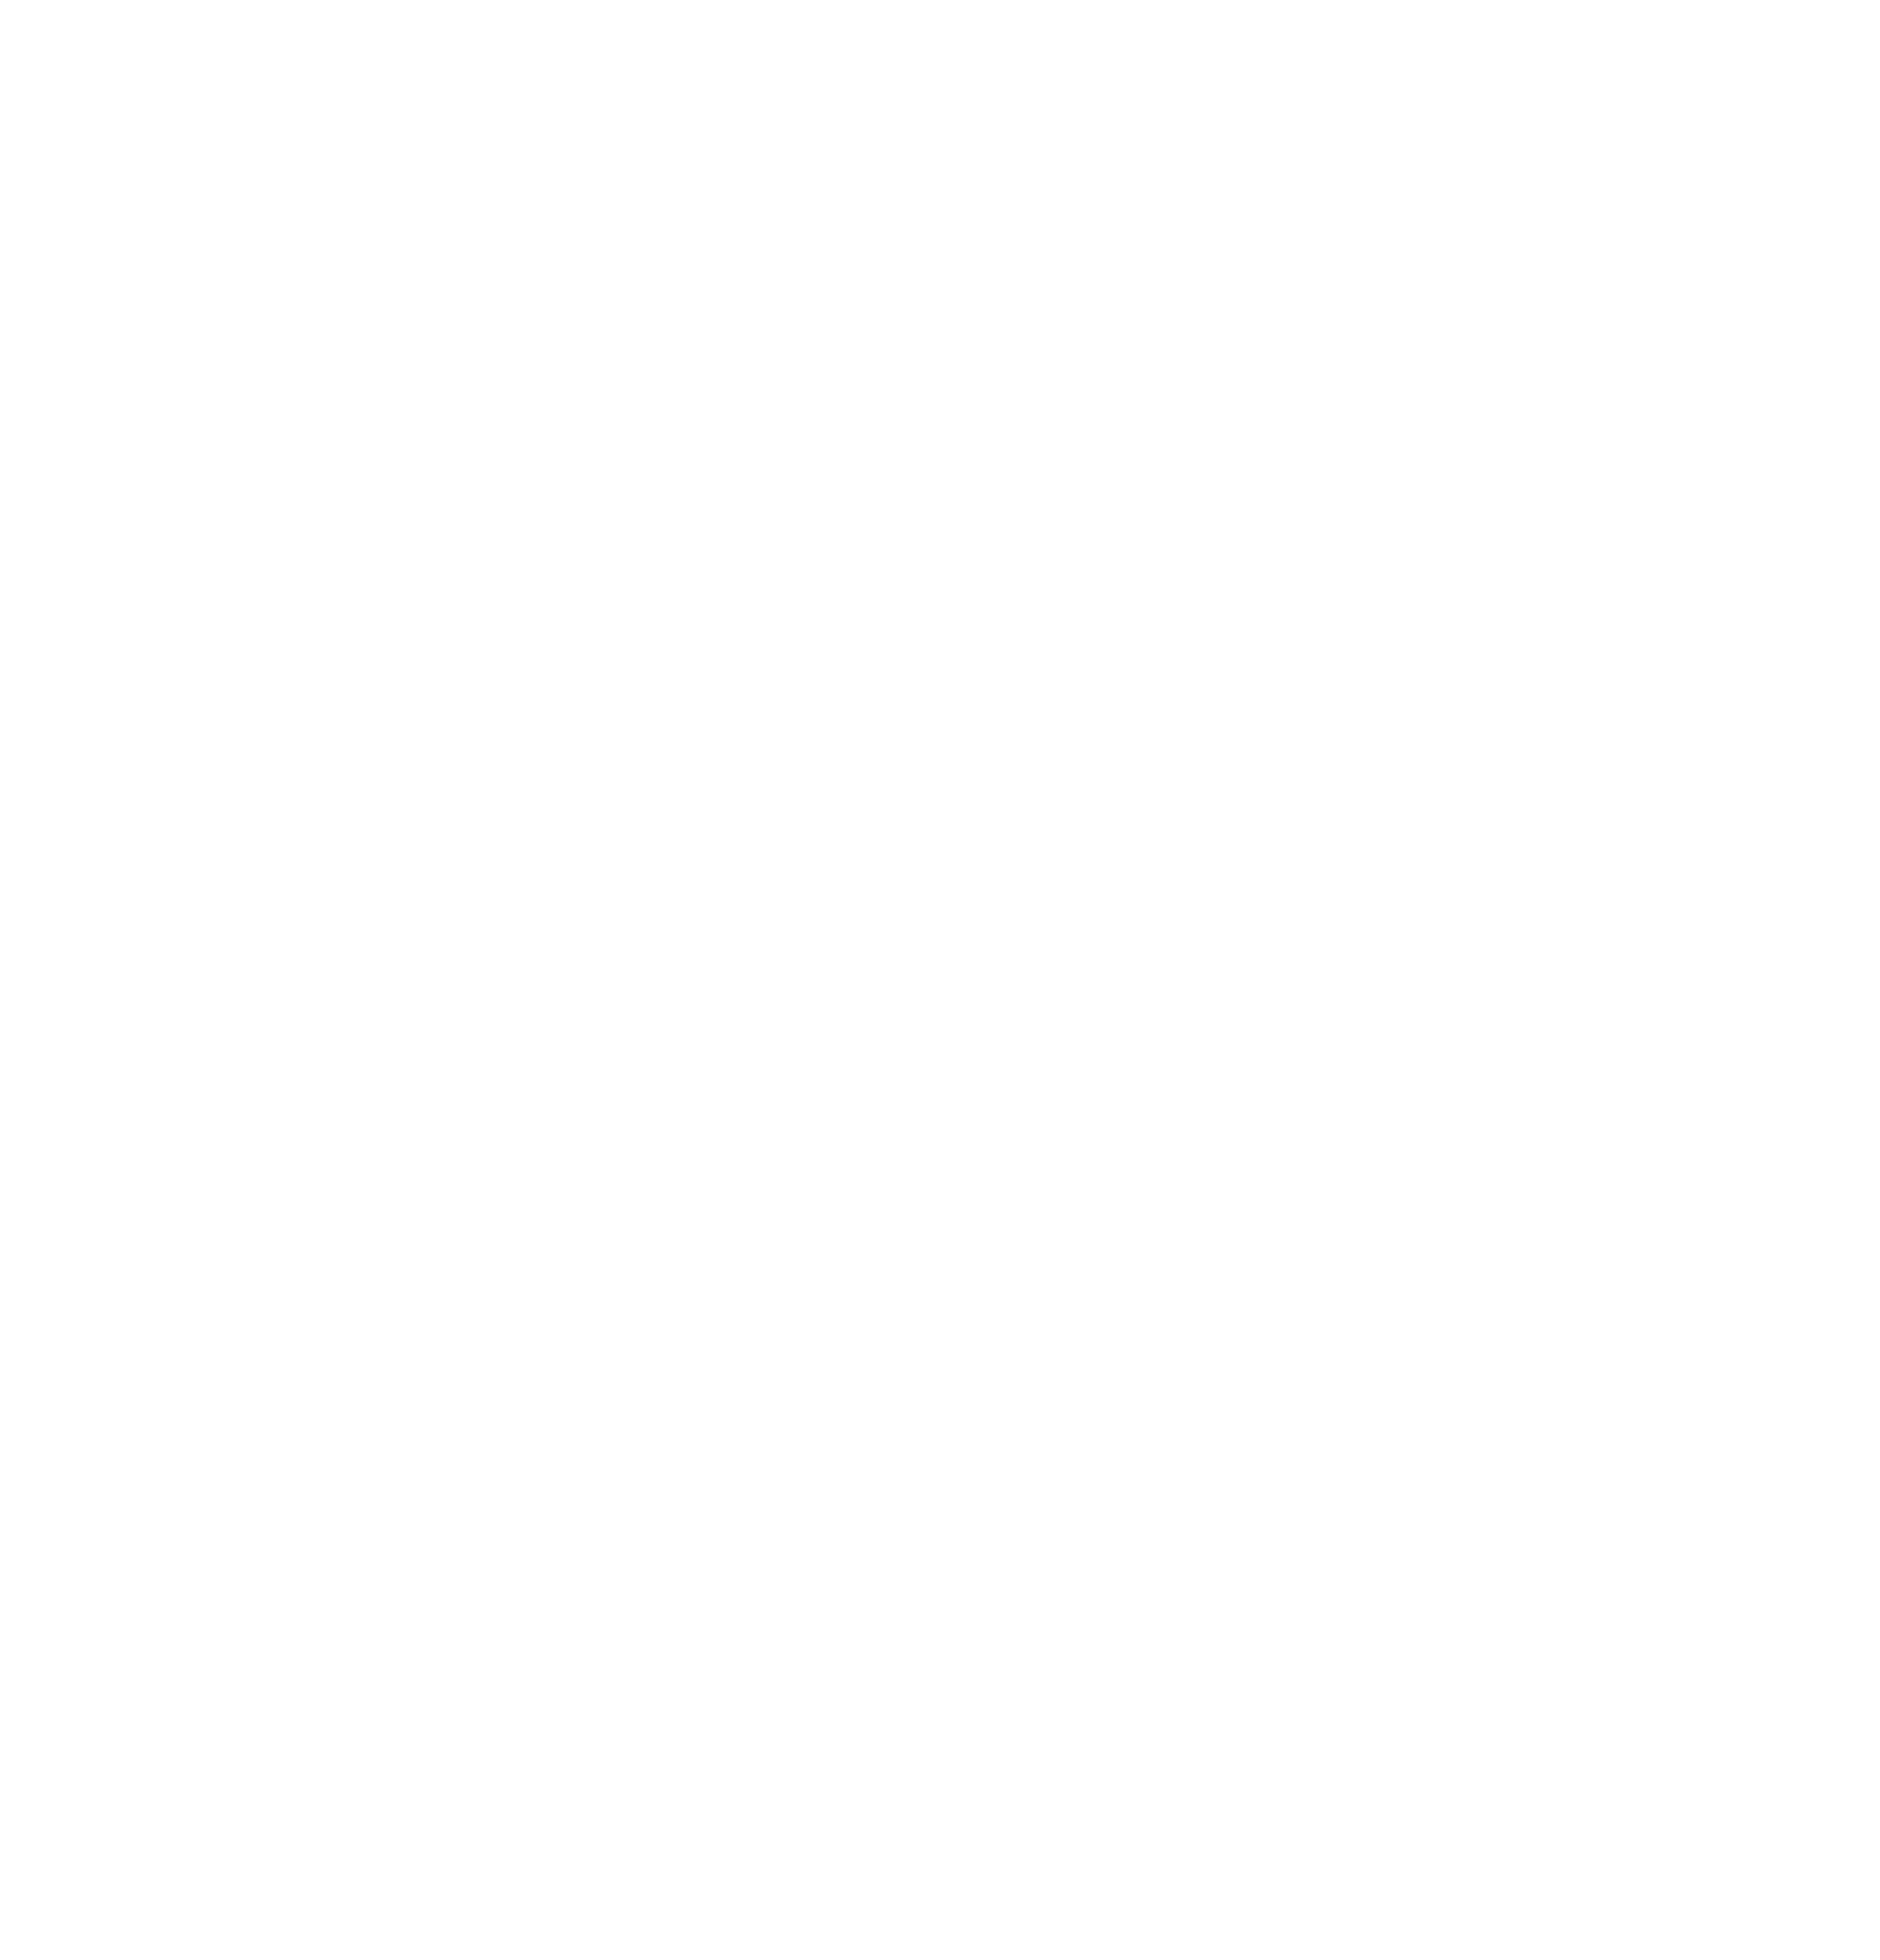 Terpene Infused Candles - West coast bloom